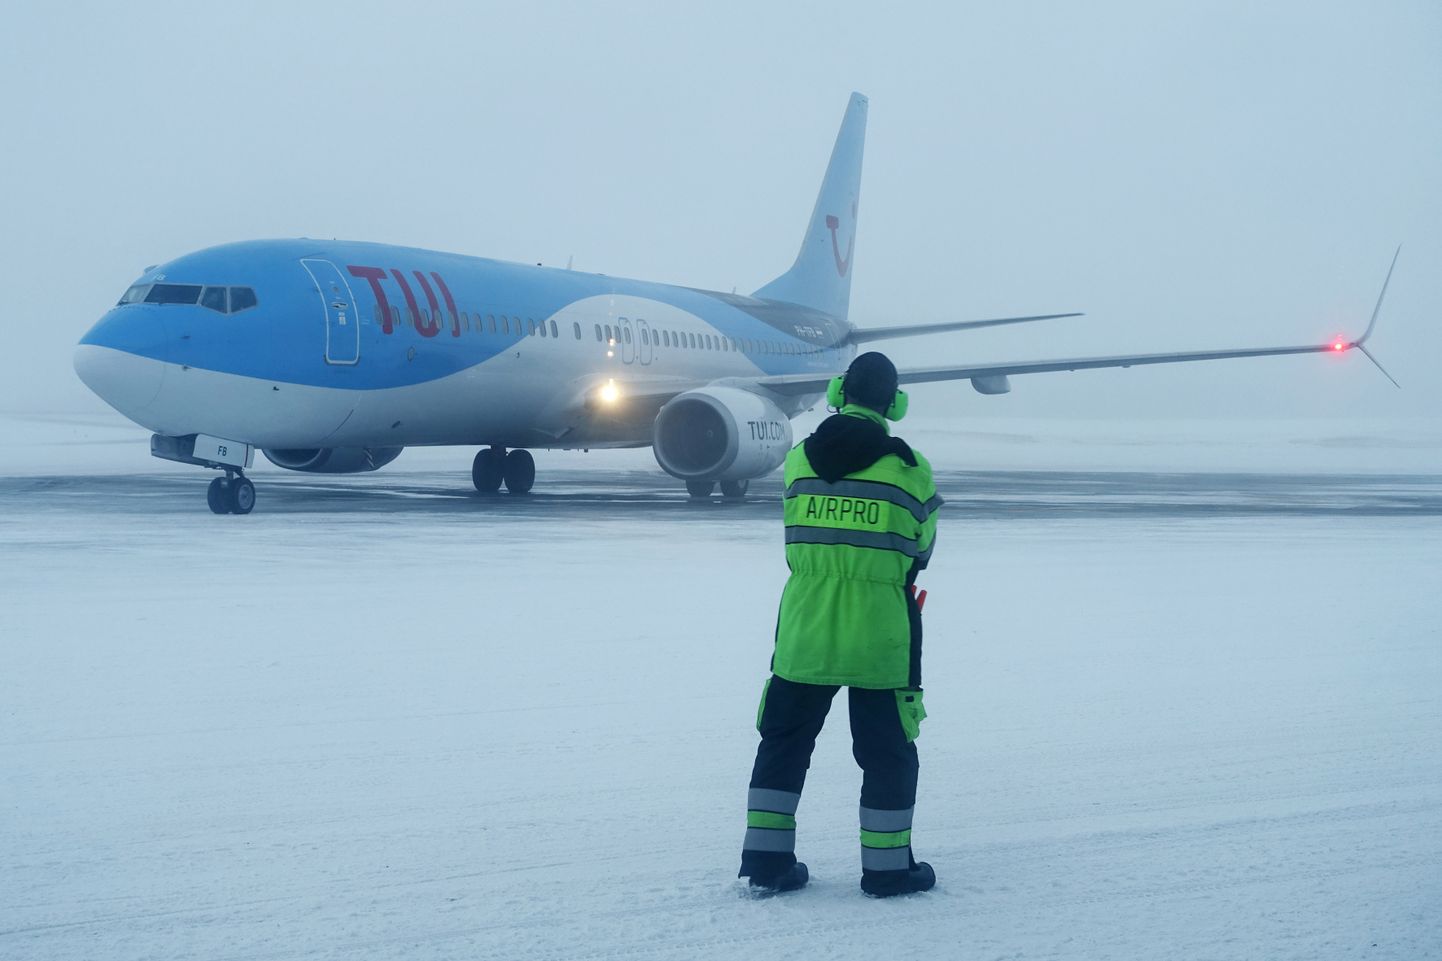 Lennuk Kittilä lennuväljal. Foto on illustratiivne.